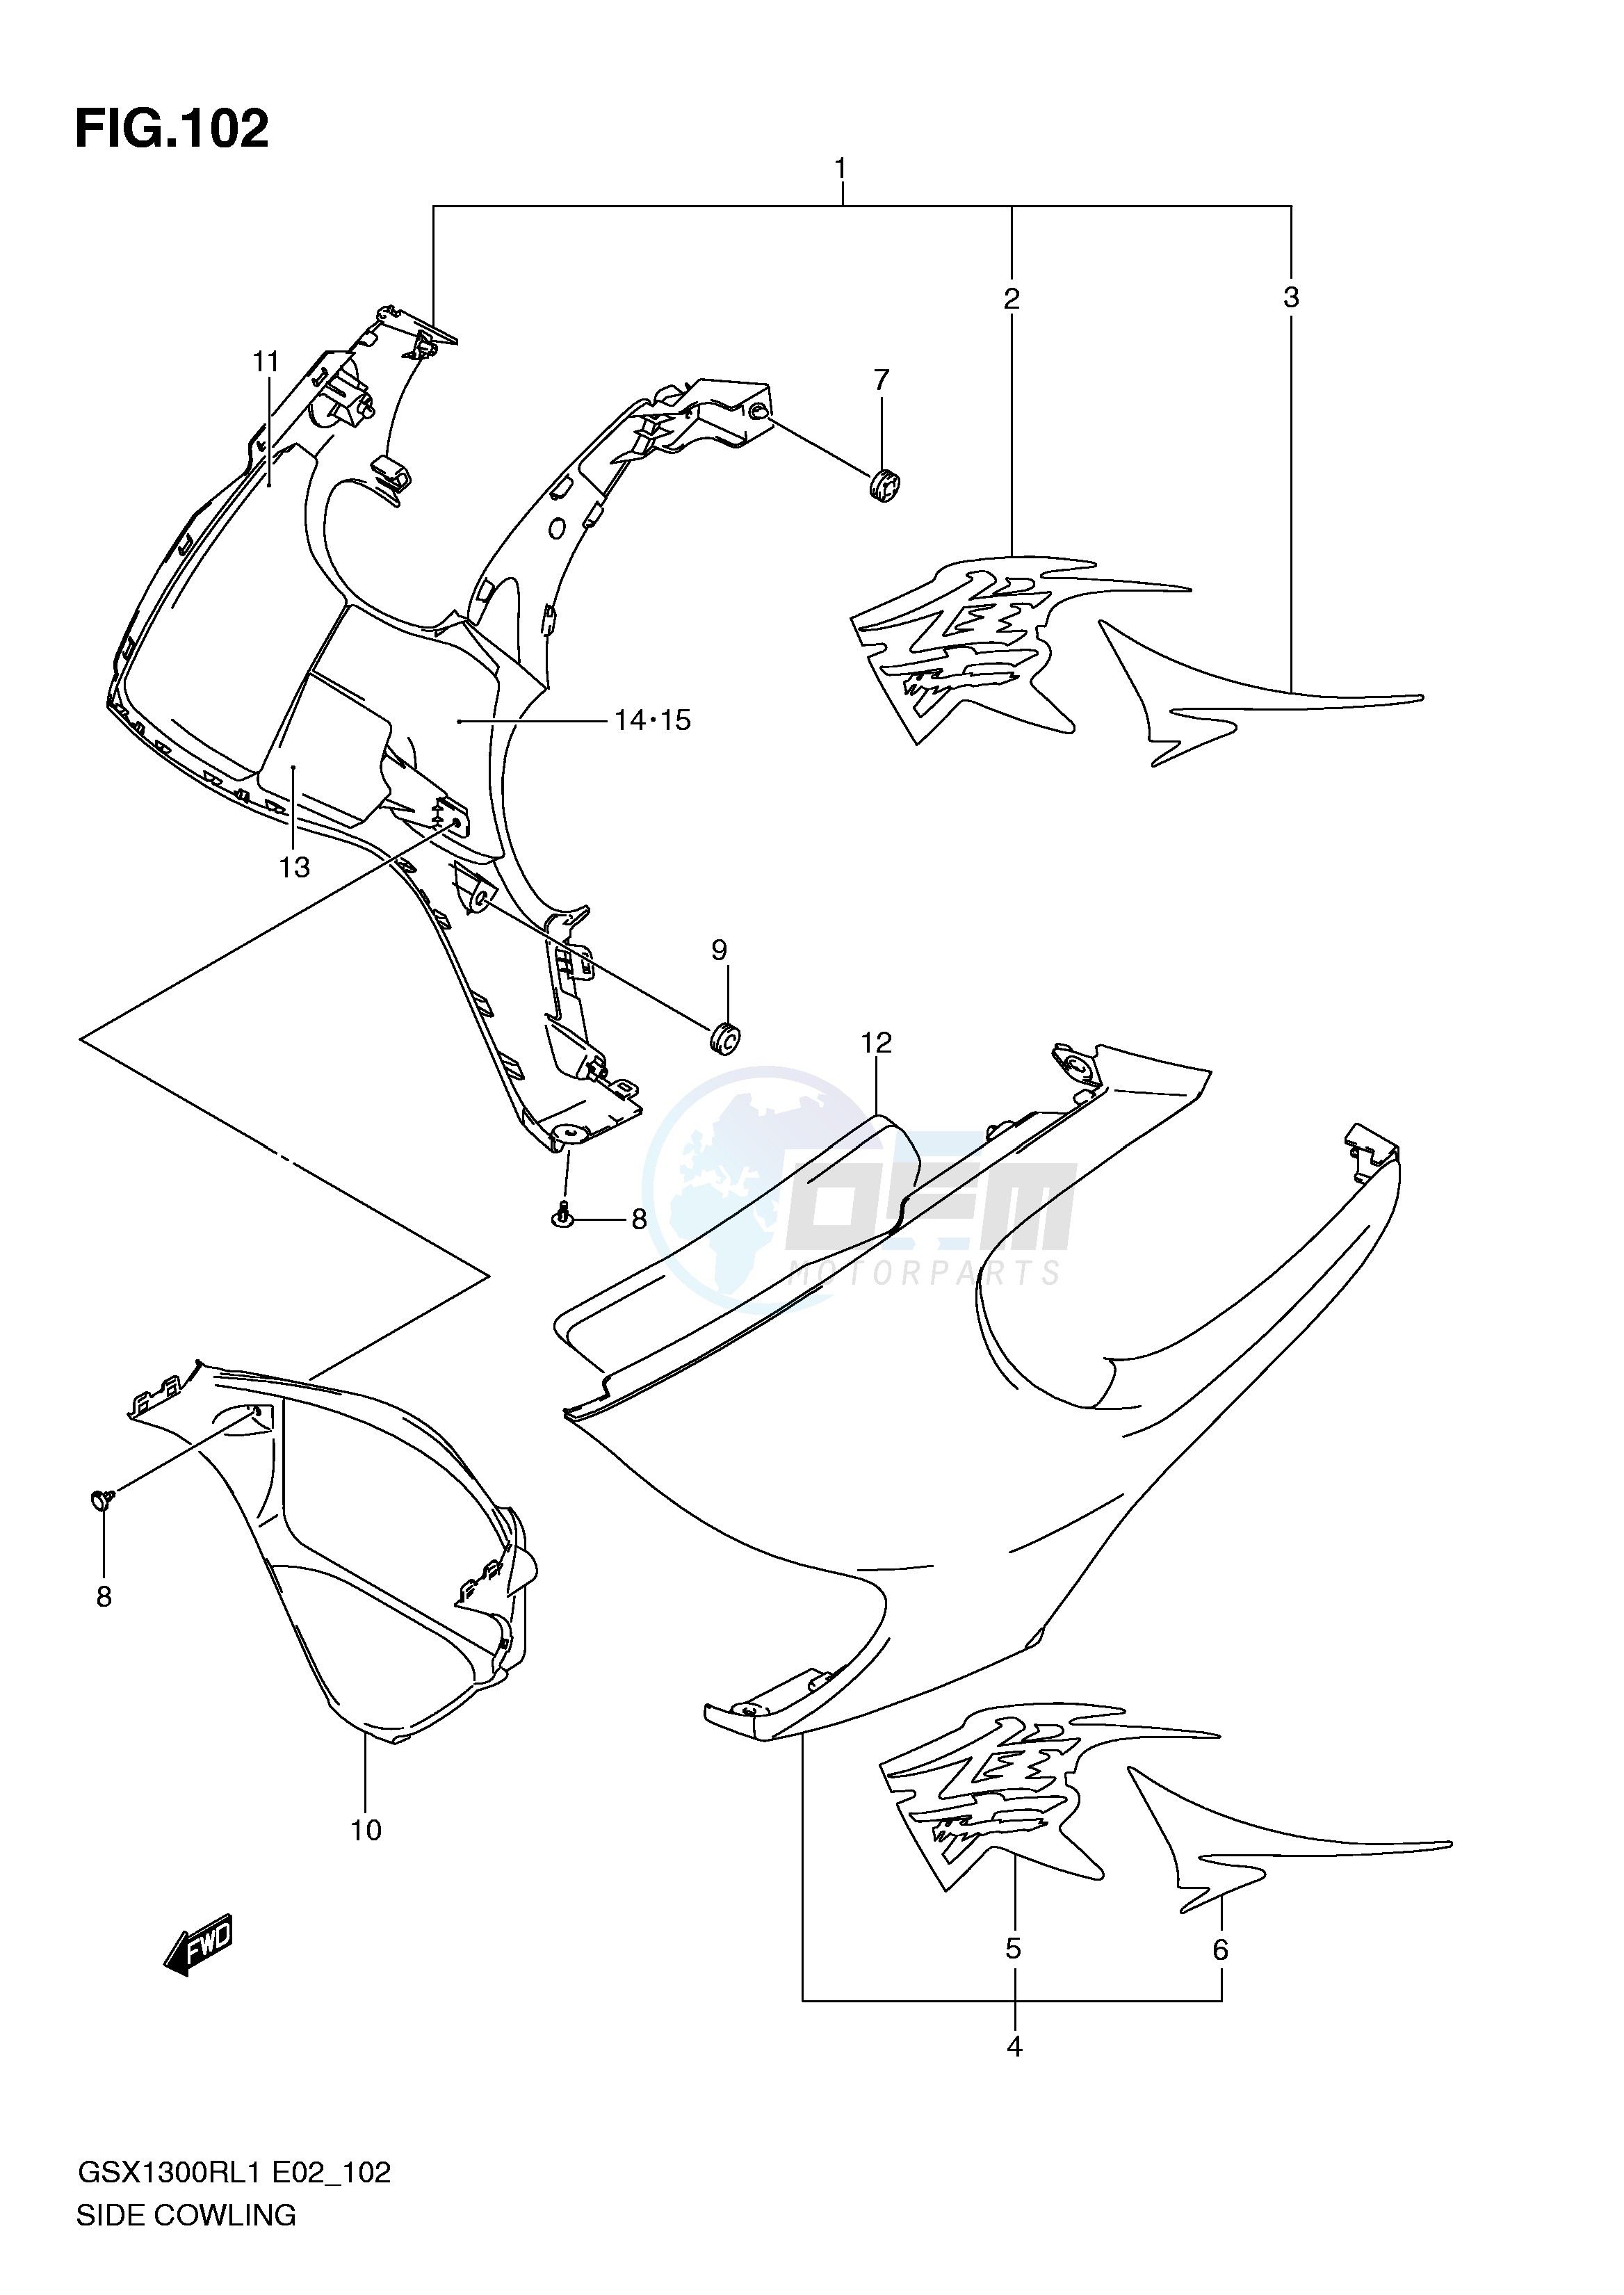 SIDE COWLING (GSX1300RL1 E24) blueprint